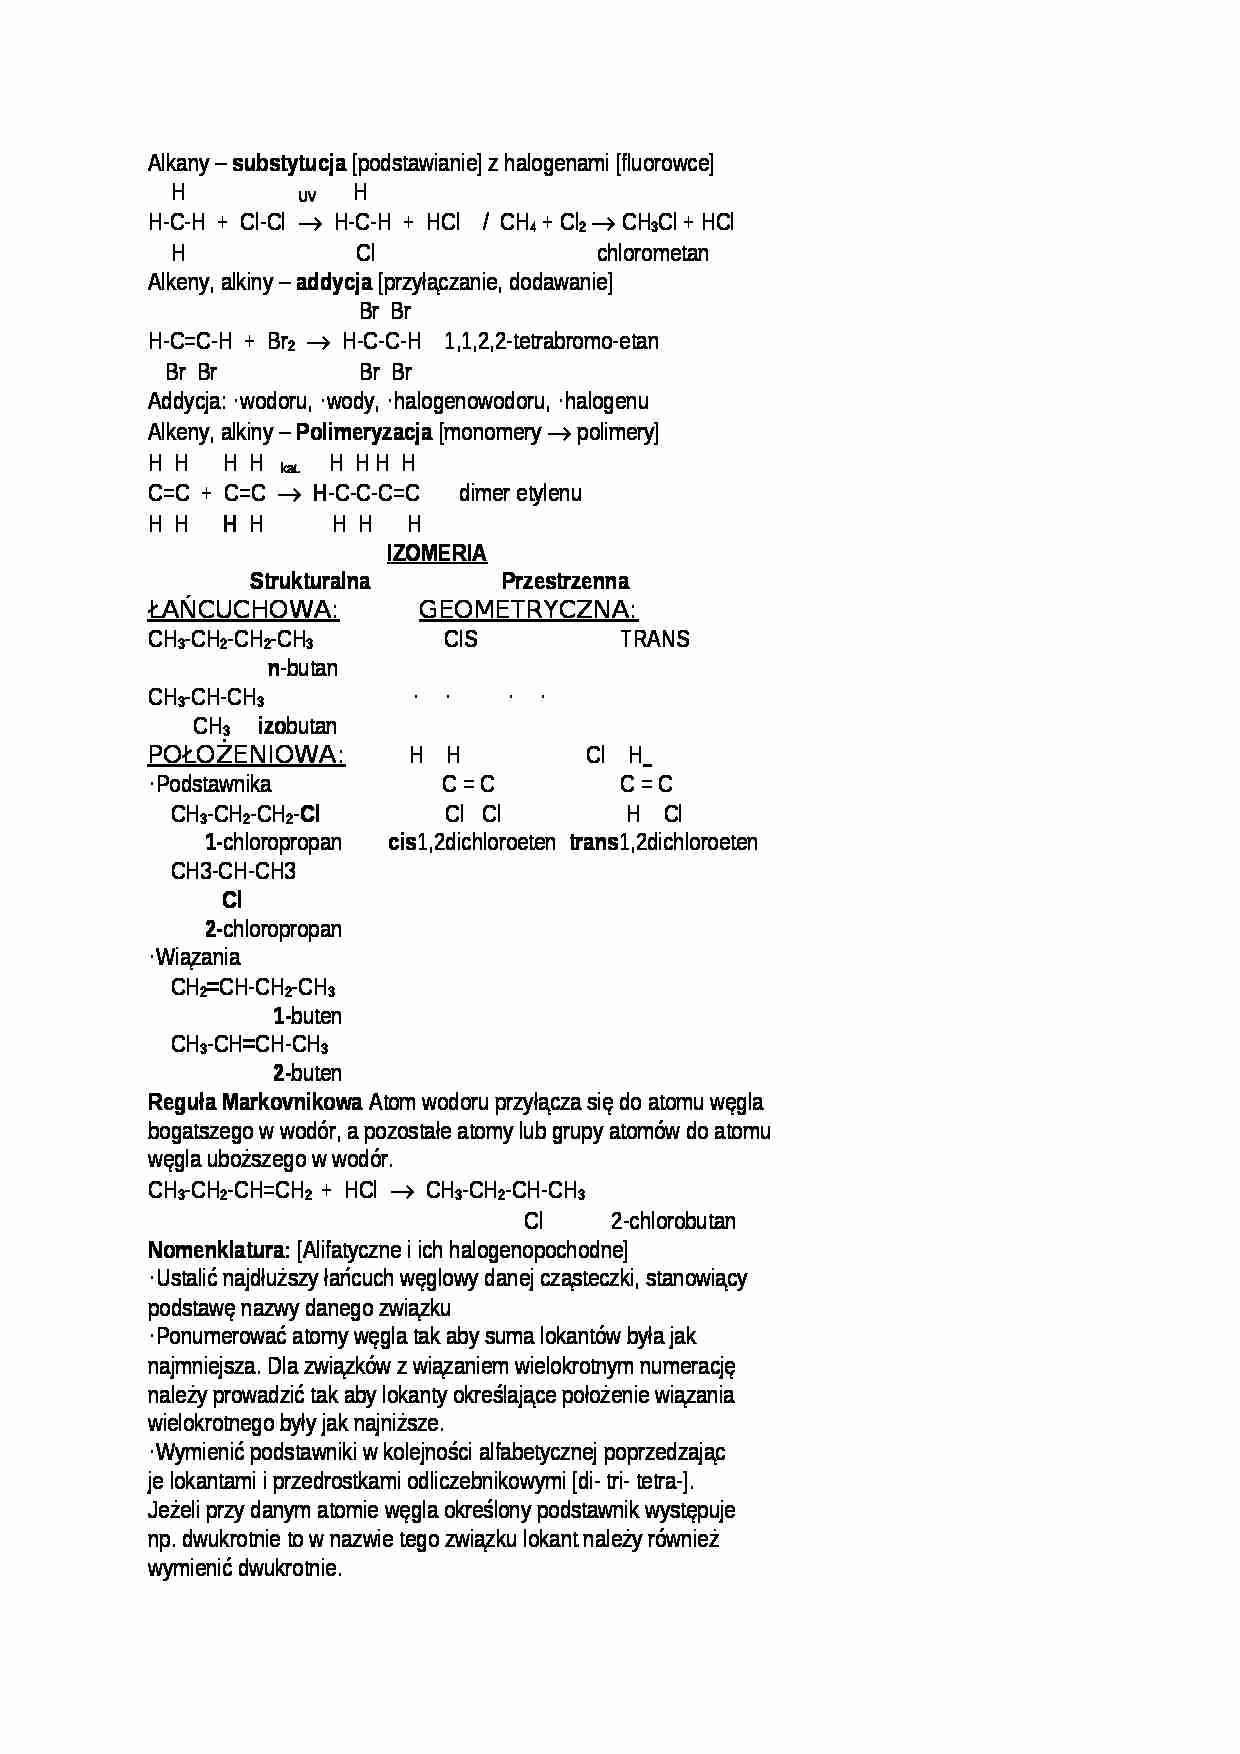 Alkany - Polimeryzacja - strona 1